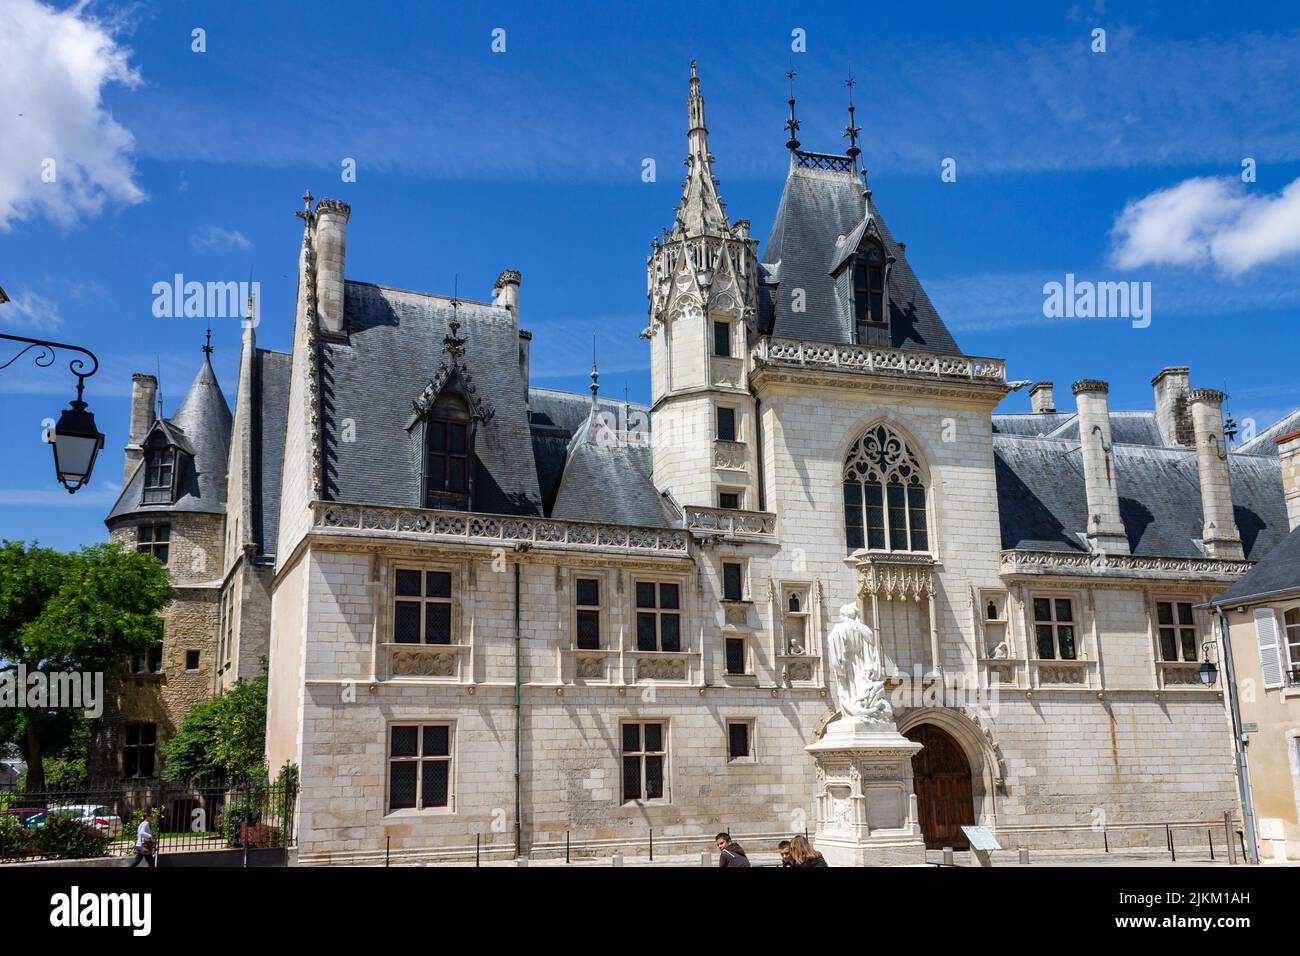 Nahaufnahme des historischen Gebäudes namens Palais Jacques Coeur in Bourges, Frankreich Stockfoto